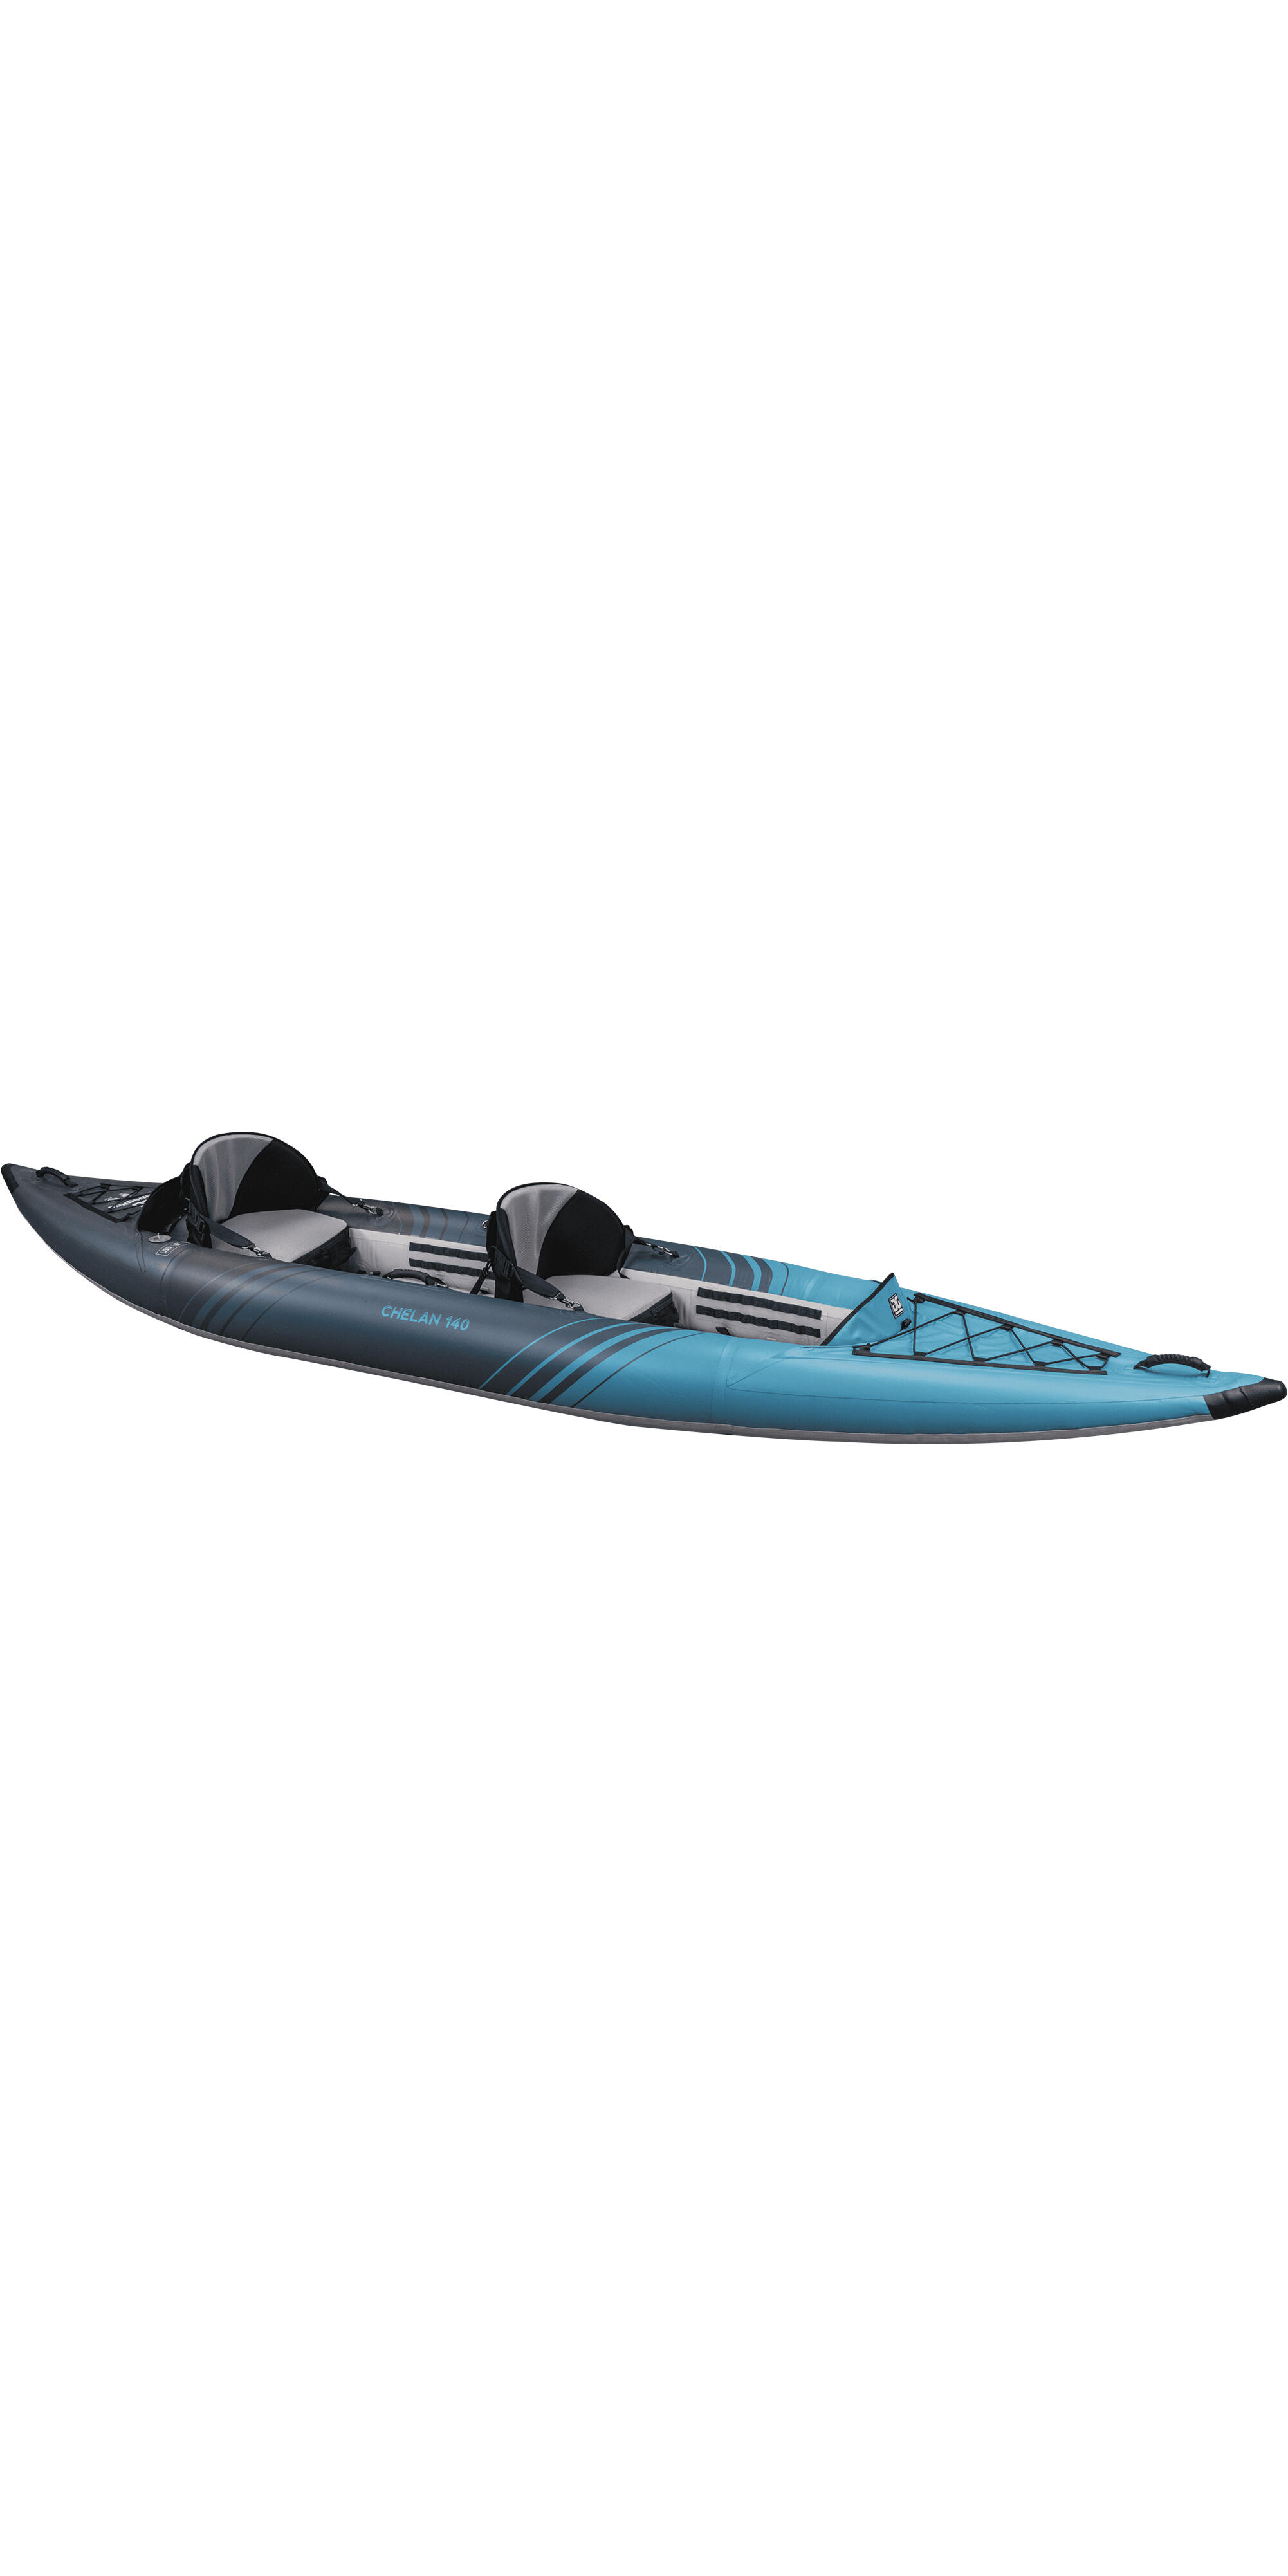 Chelan 140 2 Person Inflatable Kayak 2/6